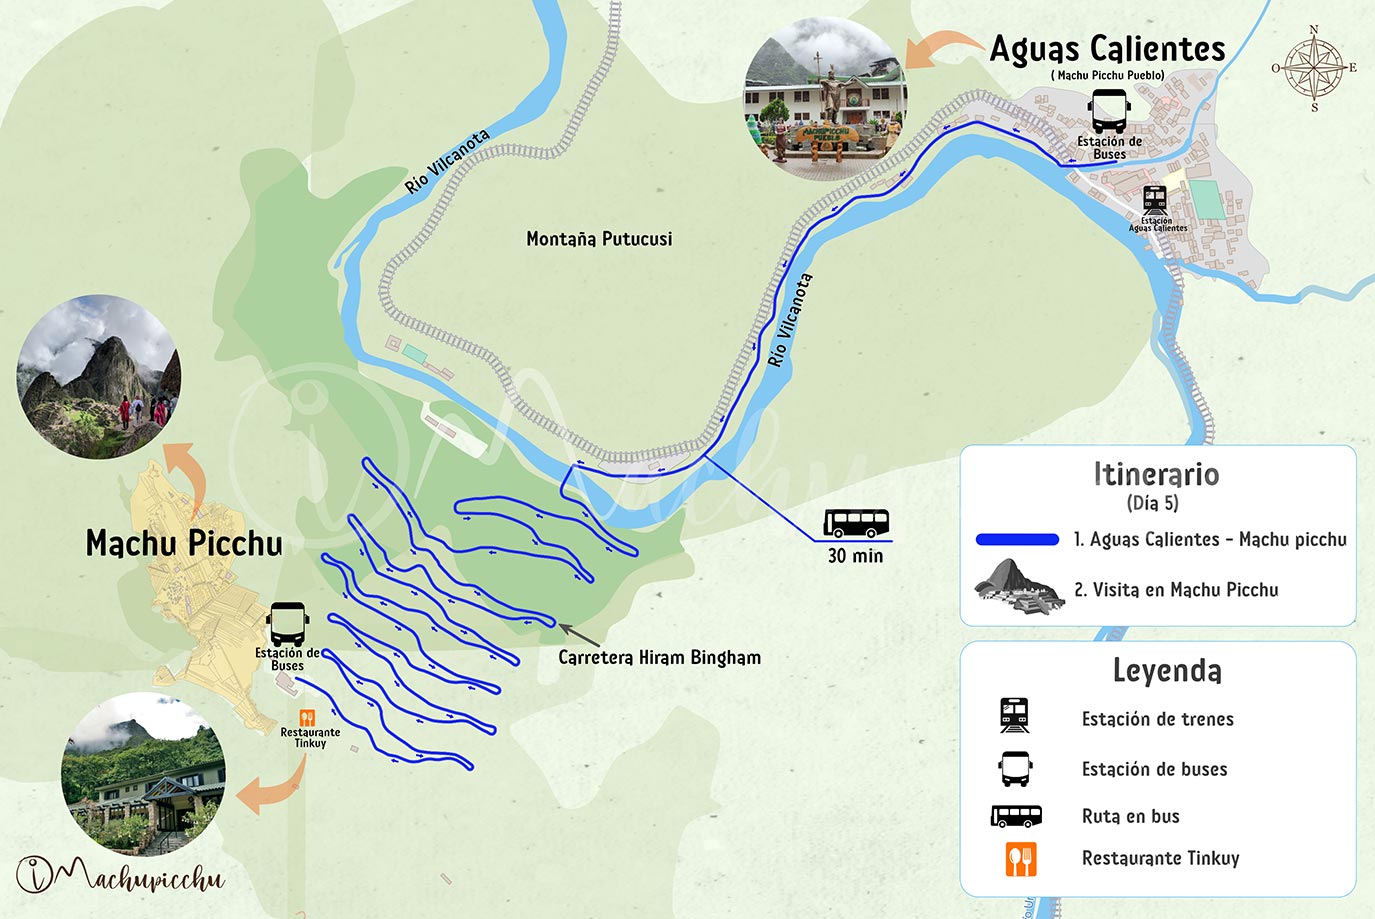 Route Aguas Calientes Machu Picchu